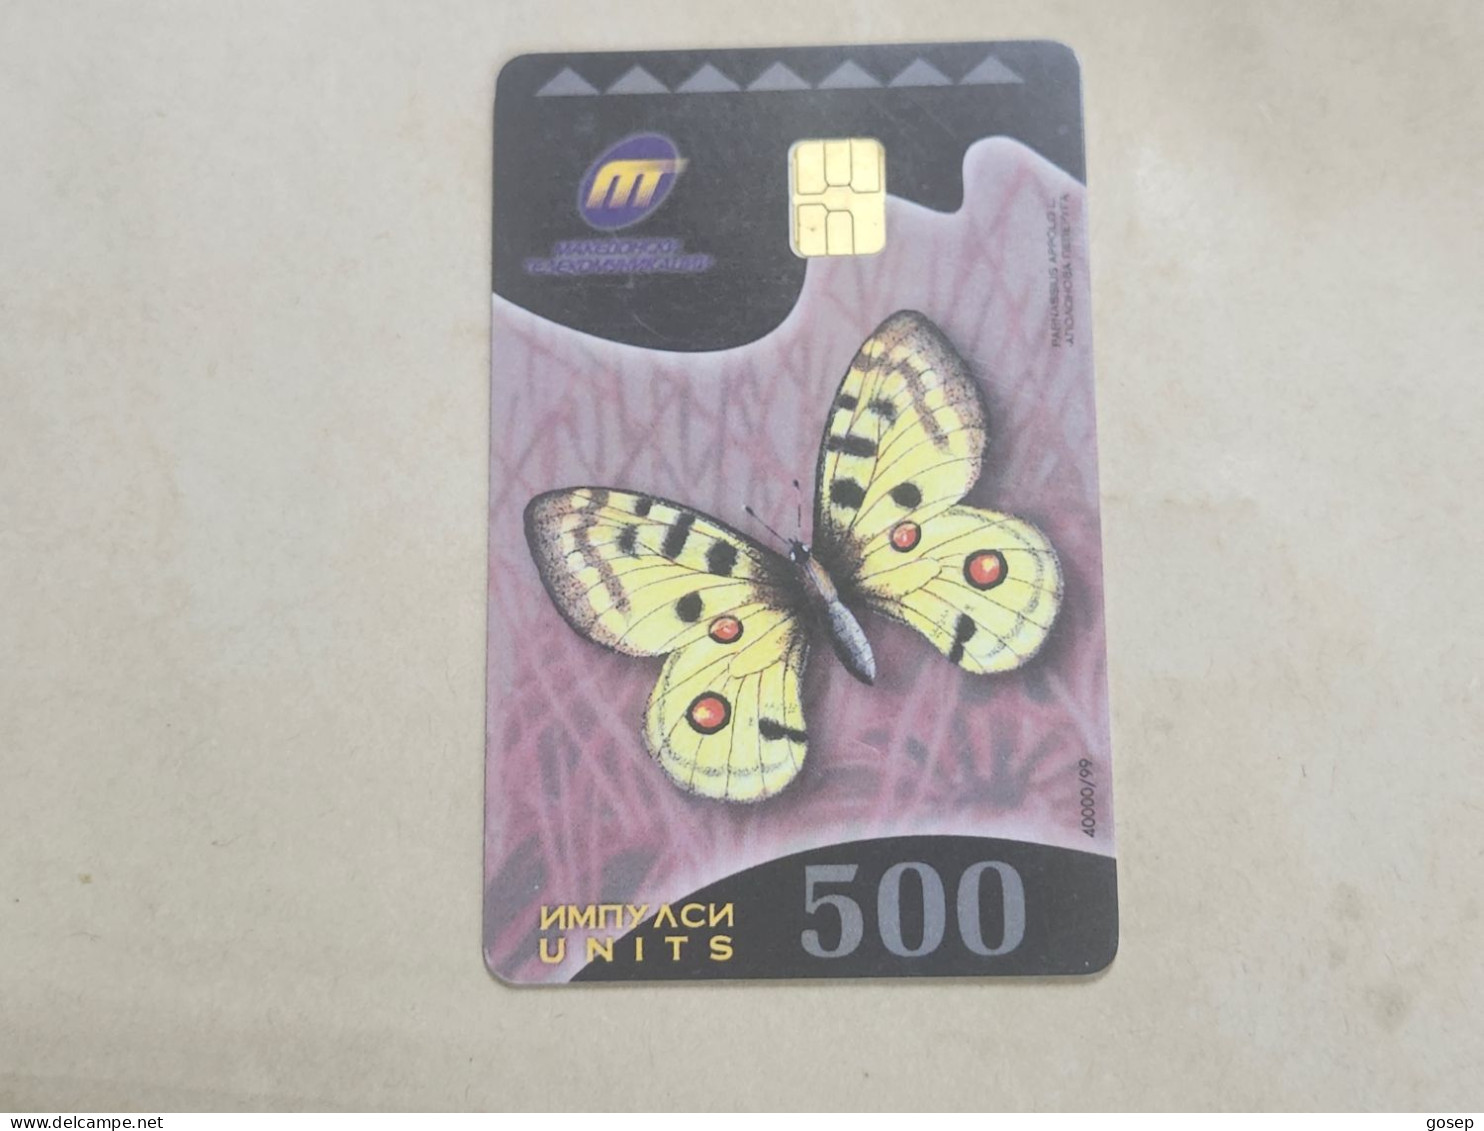 Macedonia-(MK-MAT-0009C)-Butterfly Instructions-(12)-(12/98)-(500units)-(000749104)-tirage-40.000+1card Prepiad Free - North Macedonia